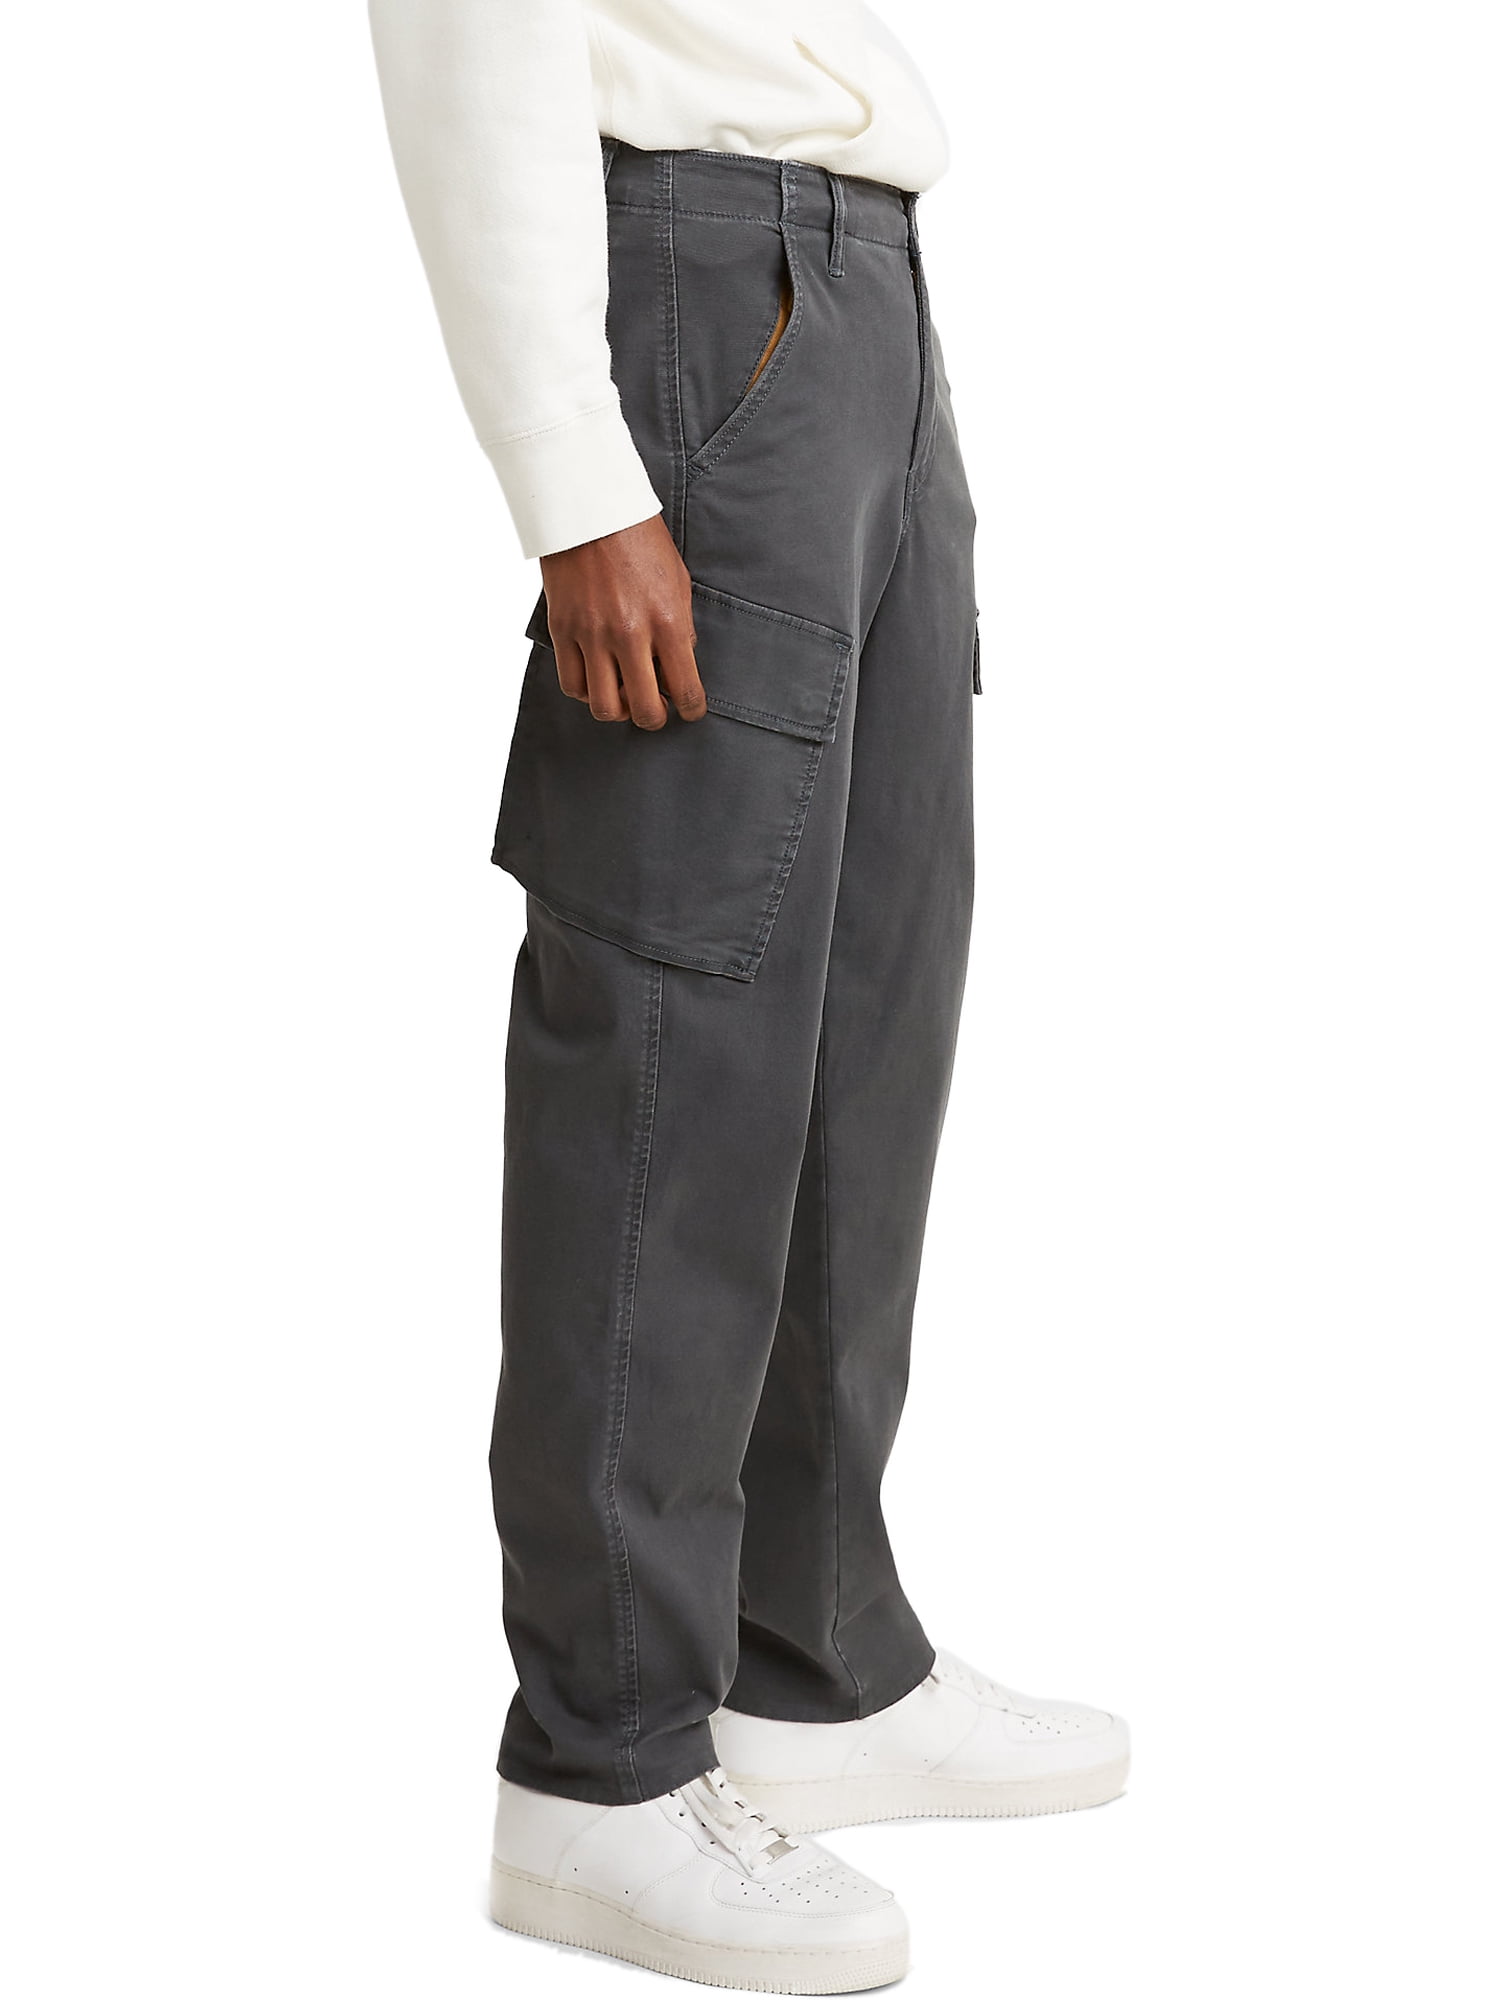 Levis Mens 33x32 Fatigue Cargo Pants Green 100% Cotton | eBay